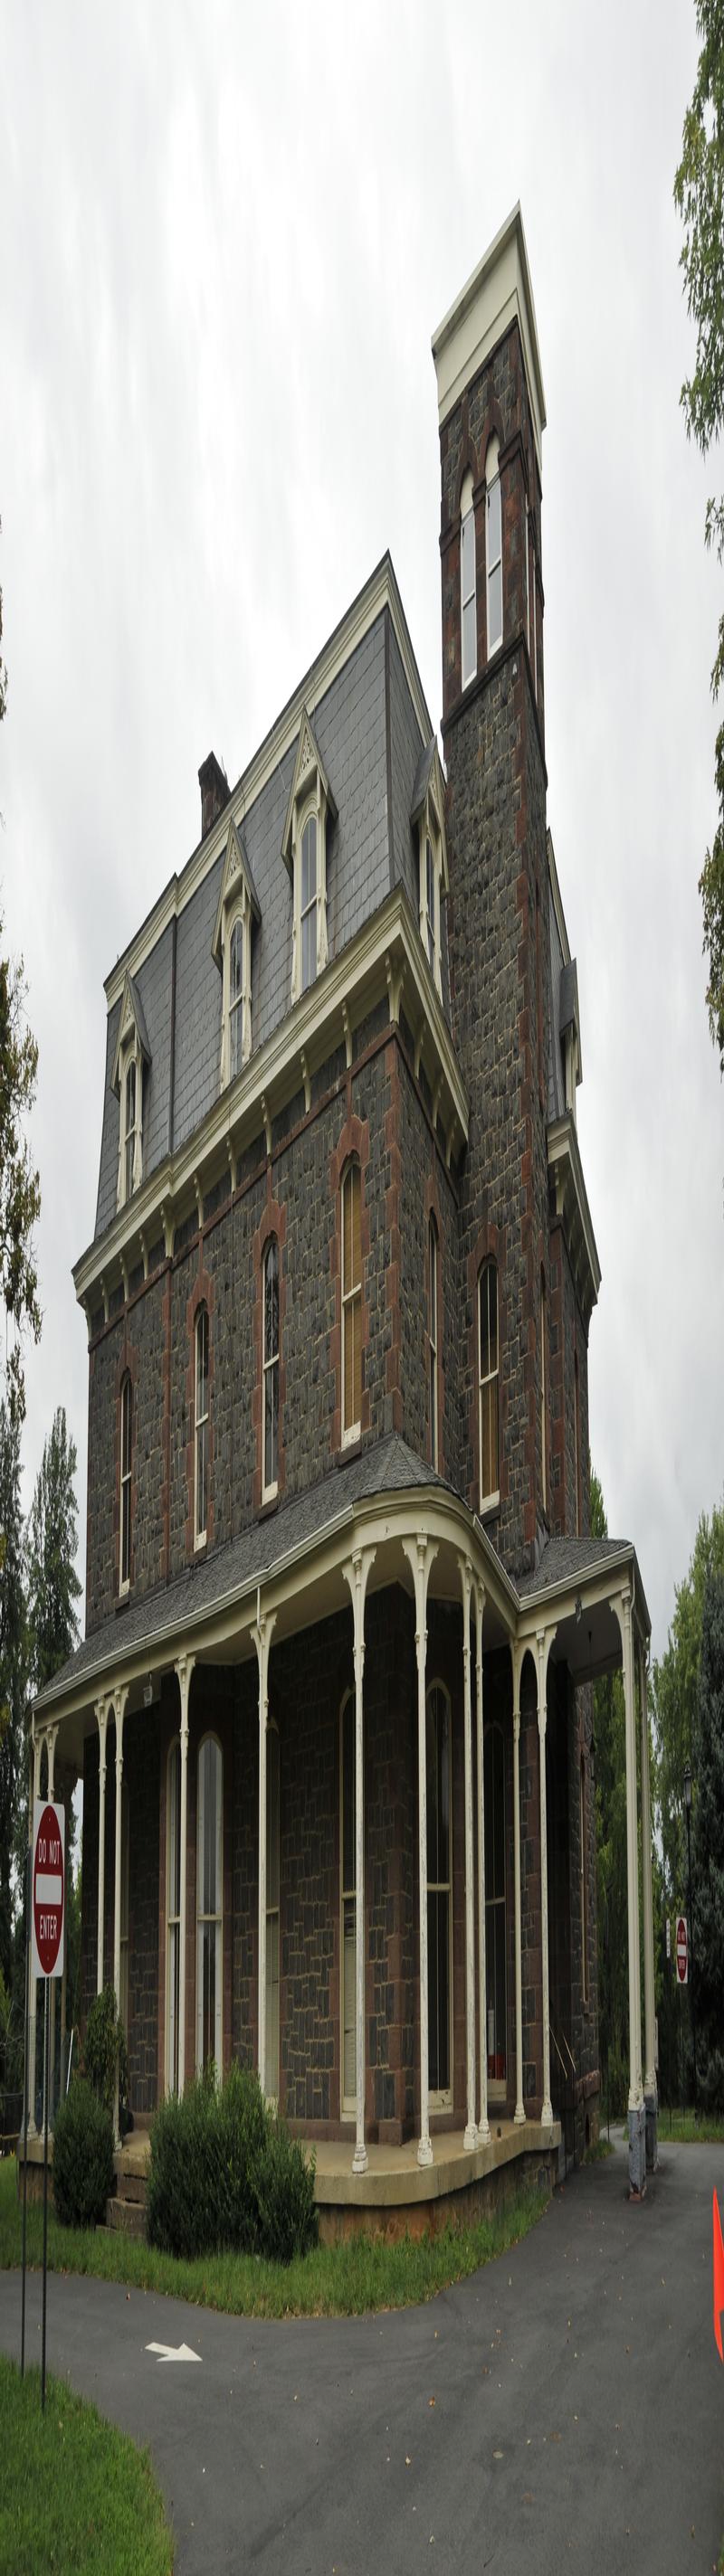 haunted house leesburg